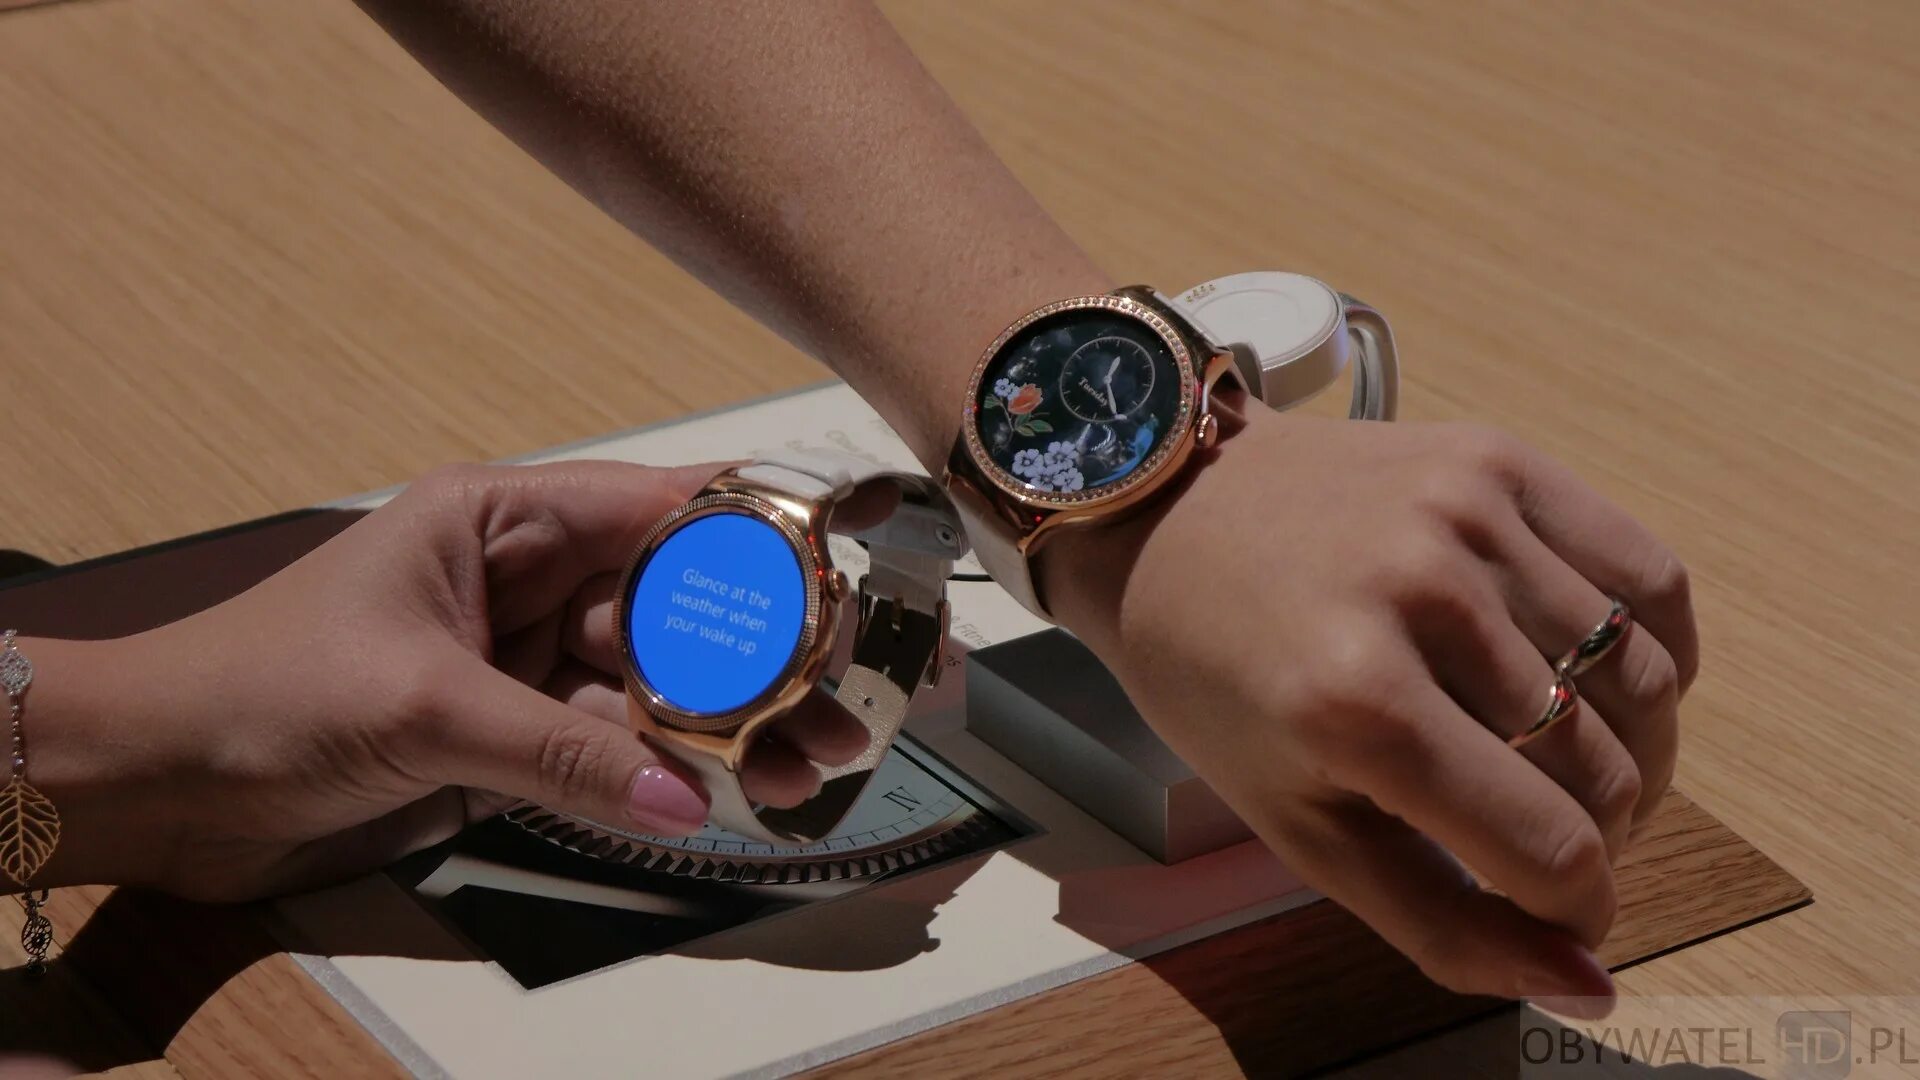 Huawei watch Elegant. Huawei watch Jewel. Смарт часы Хуавей Элегант. Huawei watch Fit белый. Часы huawei elegant